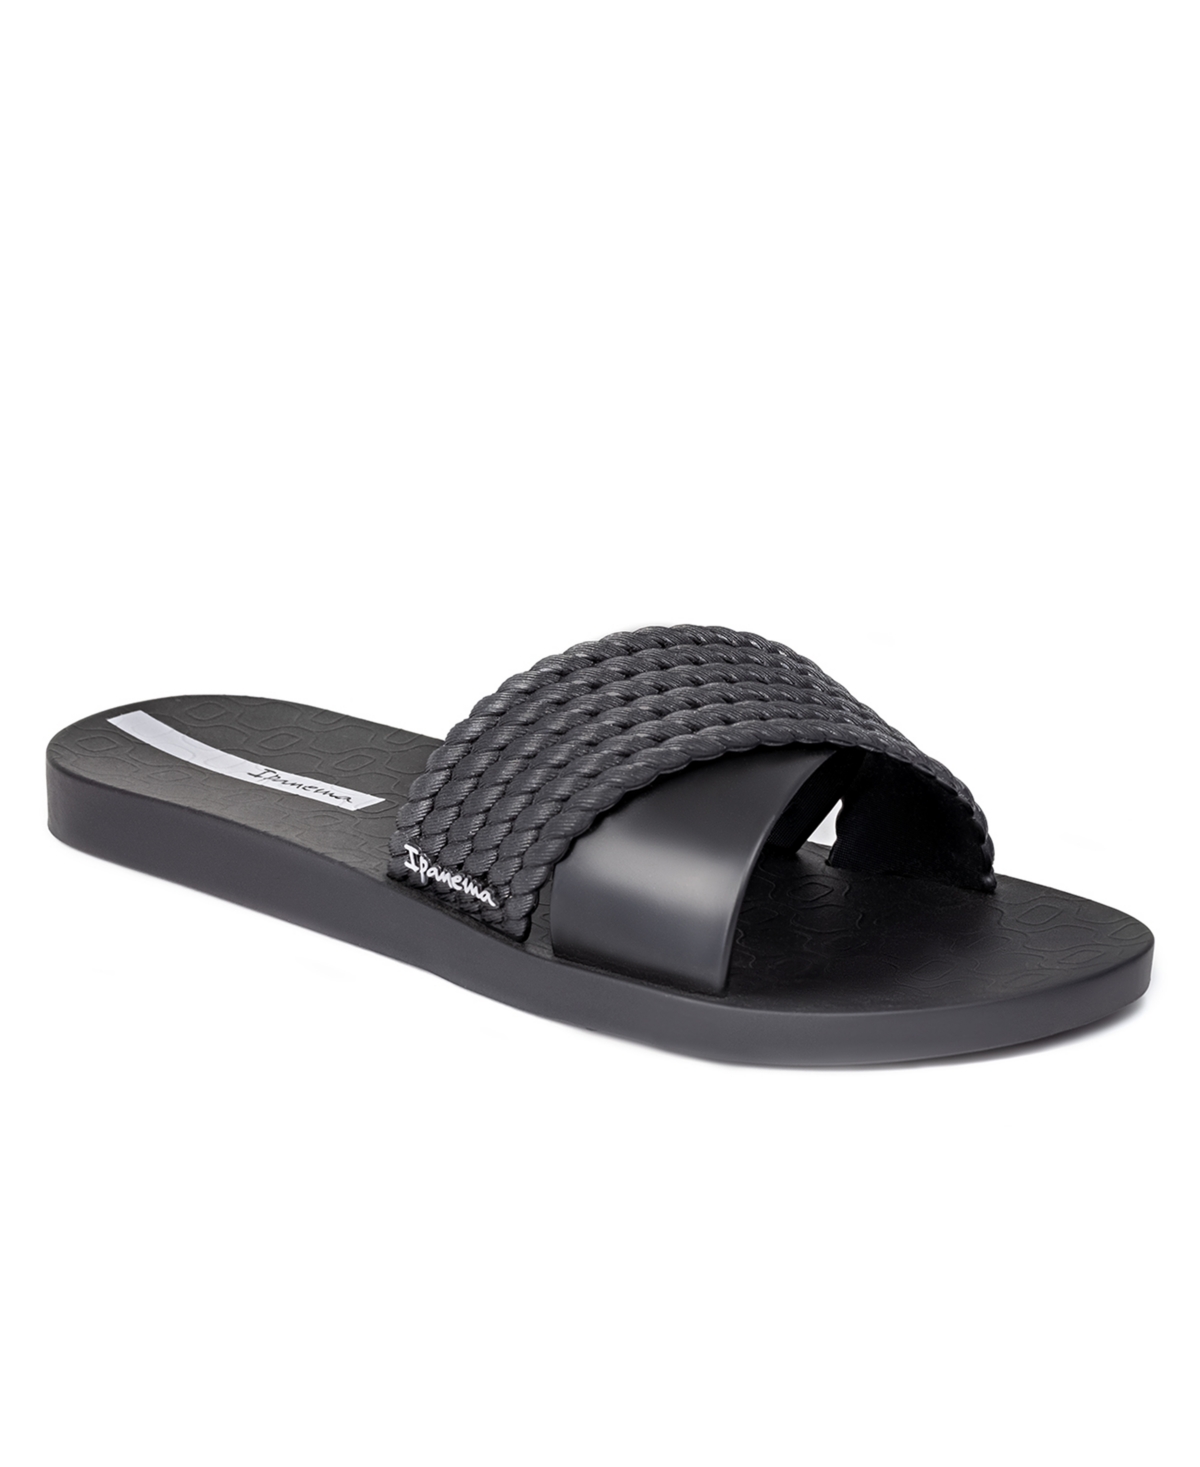 Ipanema Women's Street Ii Water-resistant Slide Sandals Women's Shoes In Black/black